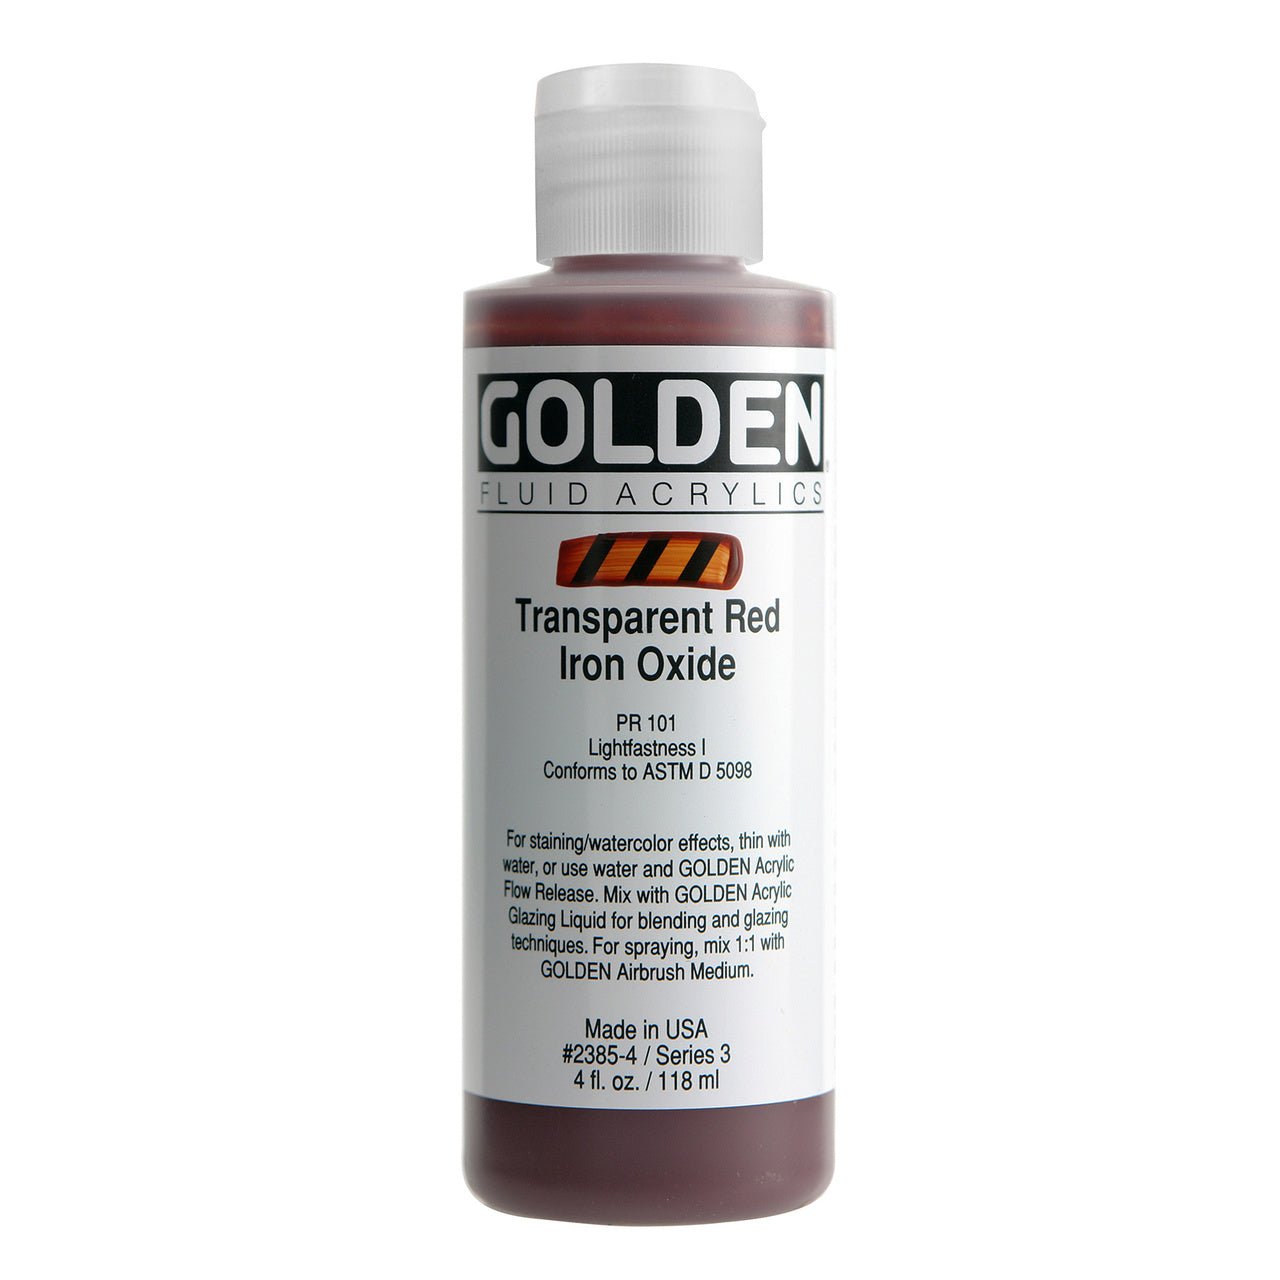 Golden Fluid Acrylic Transparent Red Iron Oxide 4 oz - merriartist.com